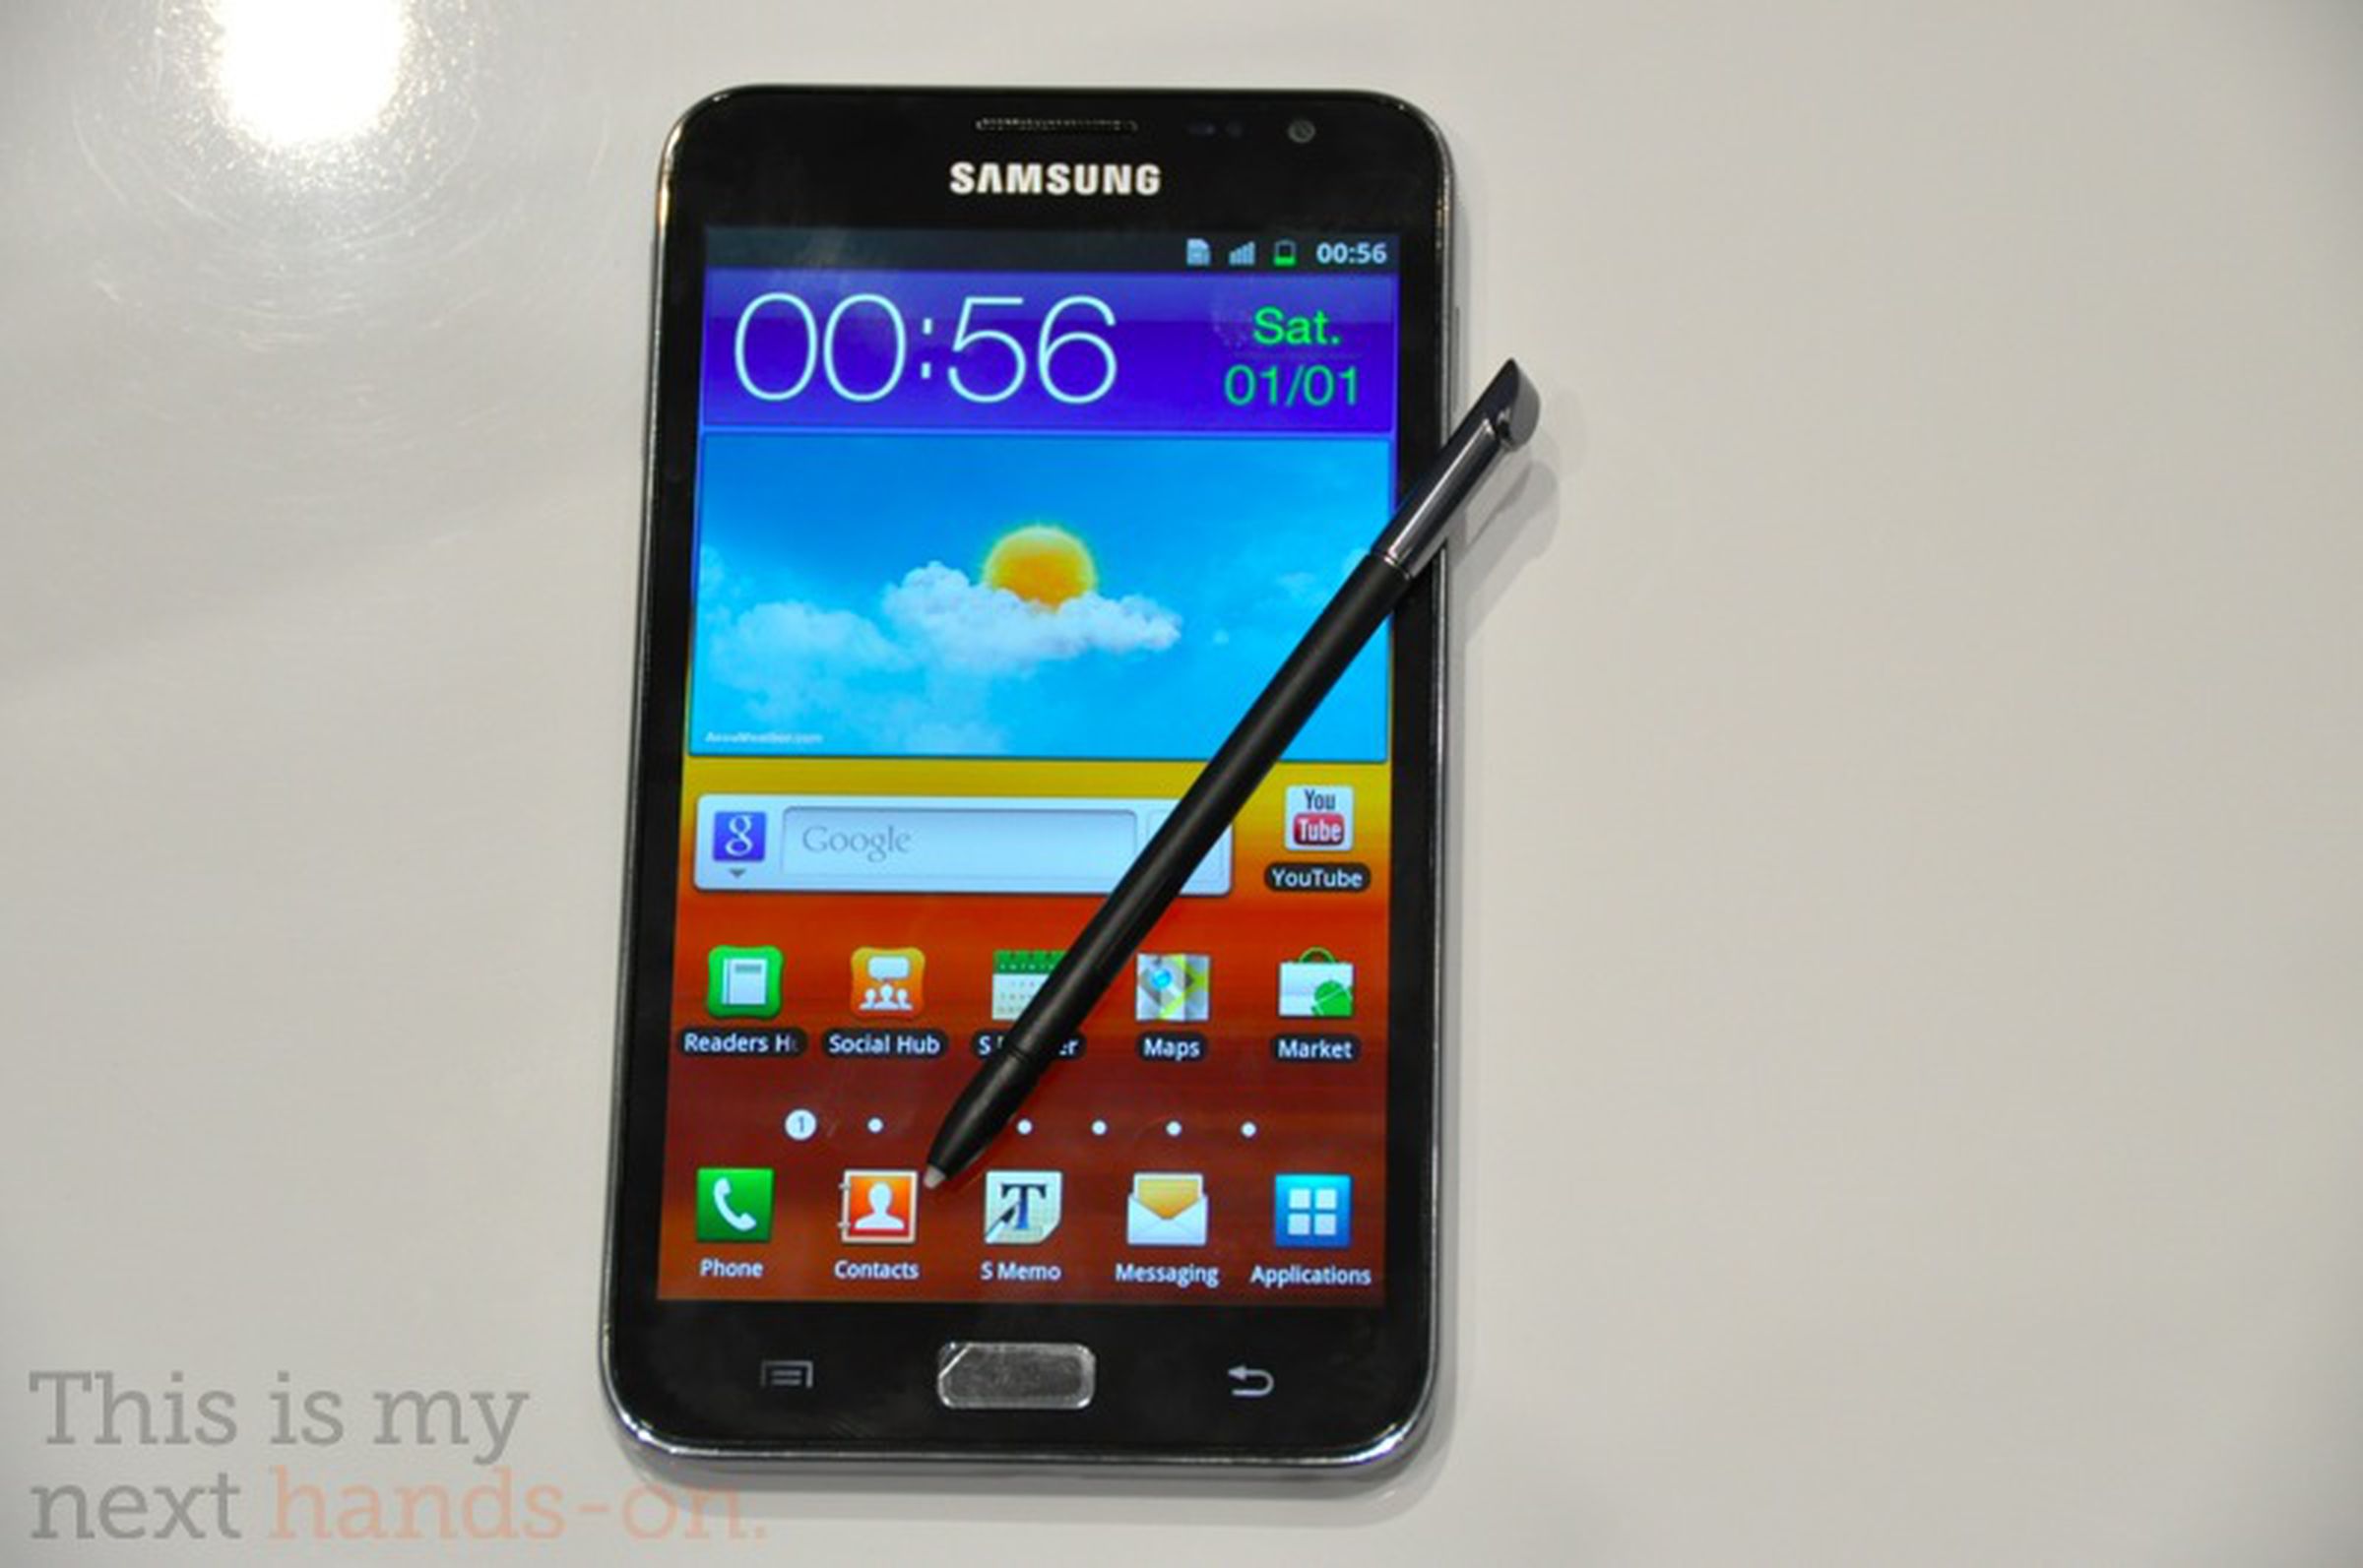 Samsung Galaxy Note hands-on photos